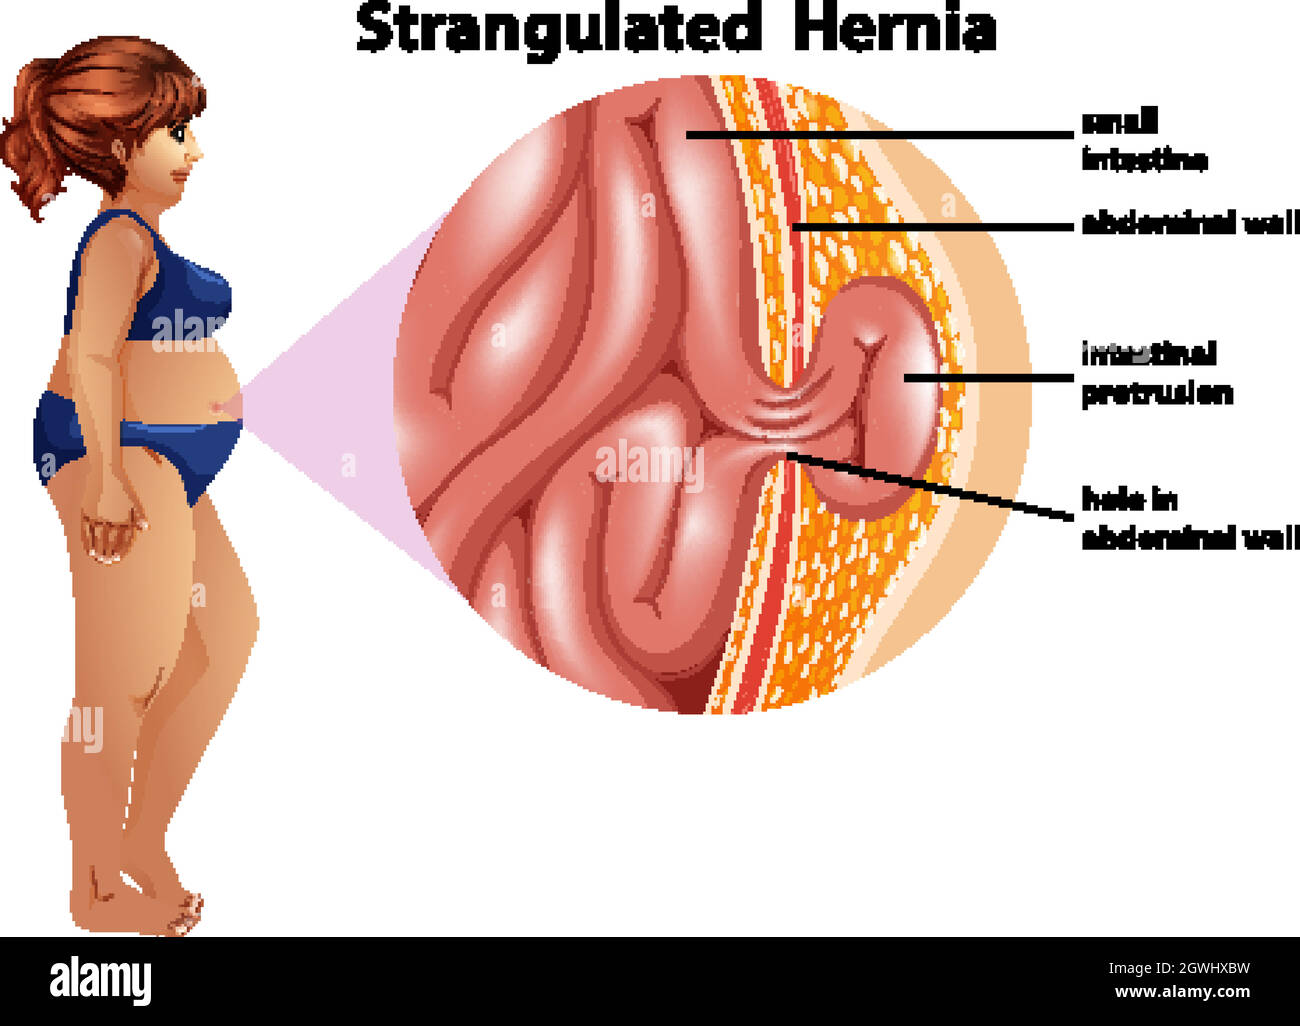 Strangulated Hernia information infographic Stock Vector